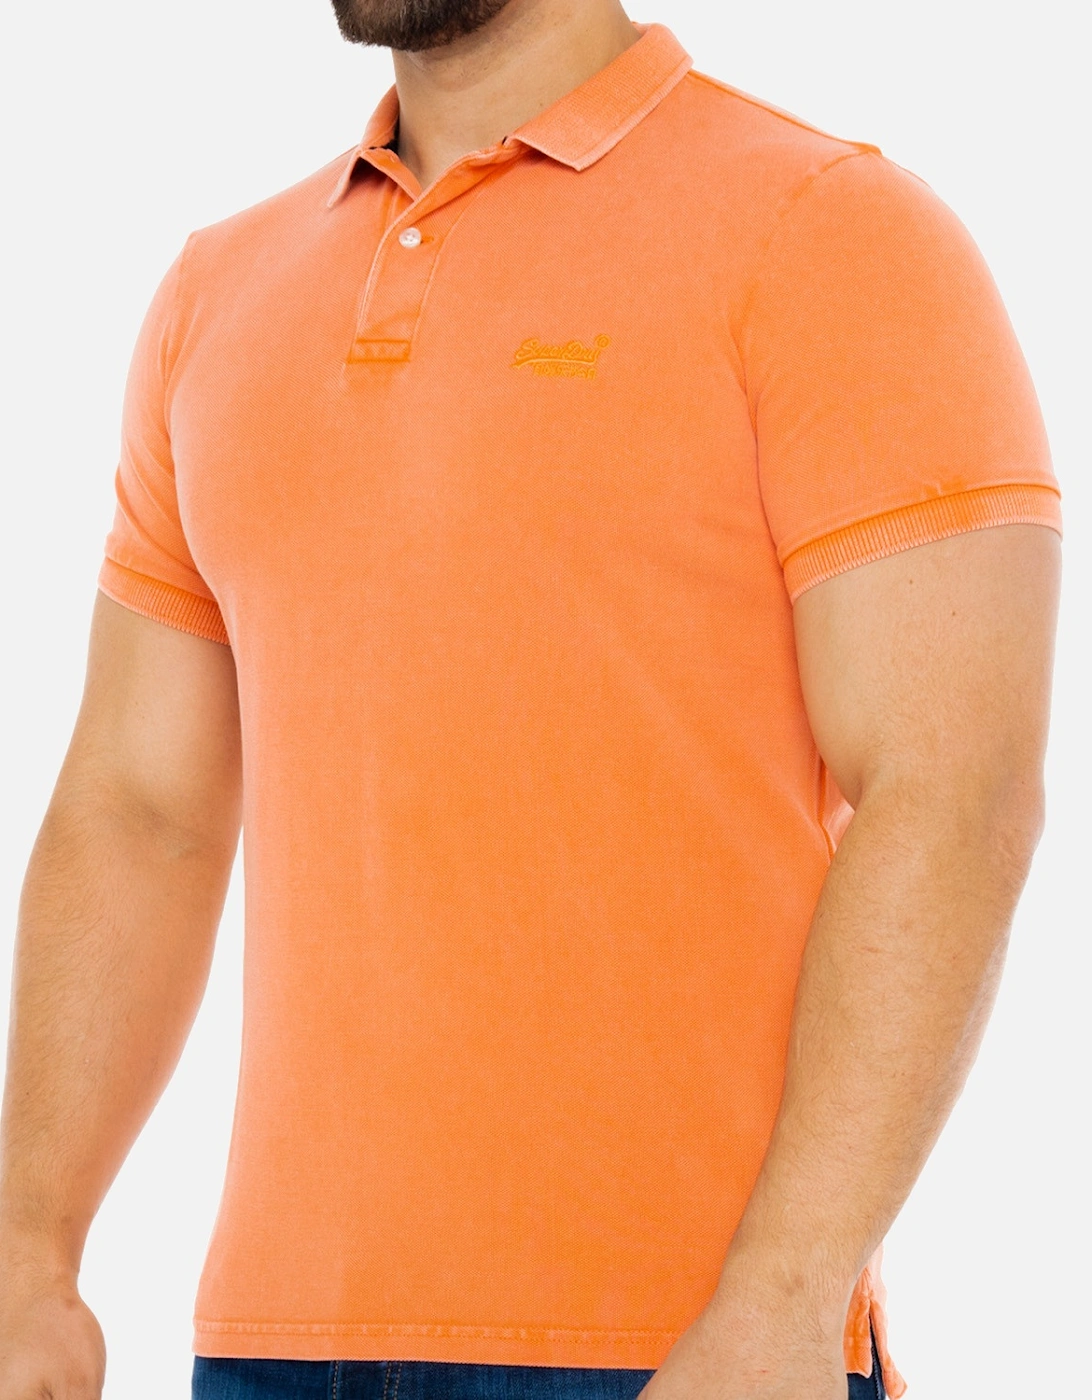 Mens Vintage Destroy Polo Shirt (Orange)